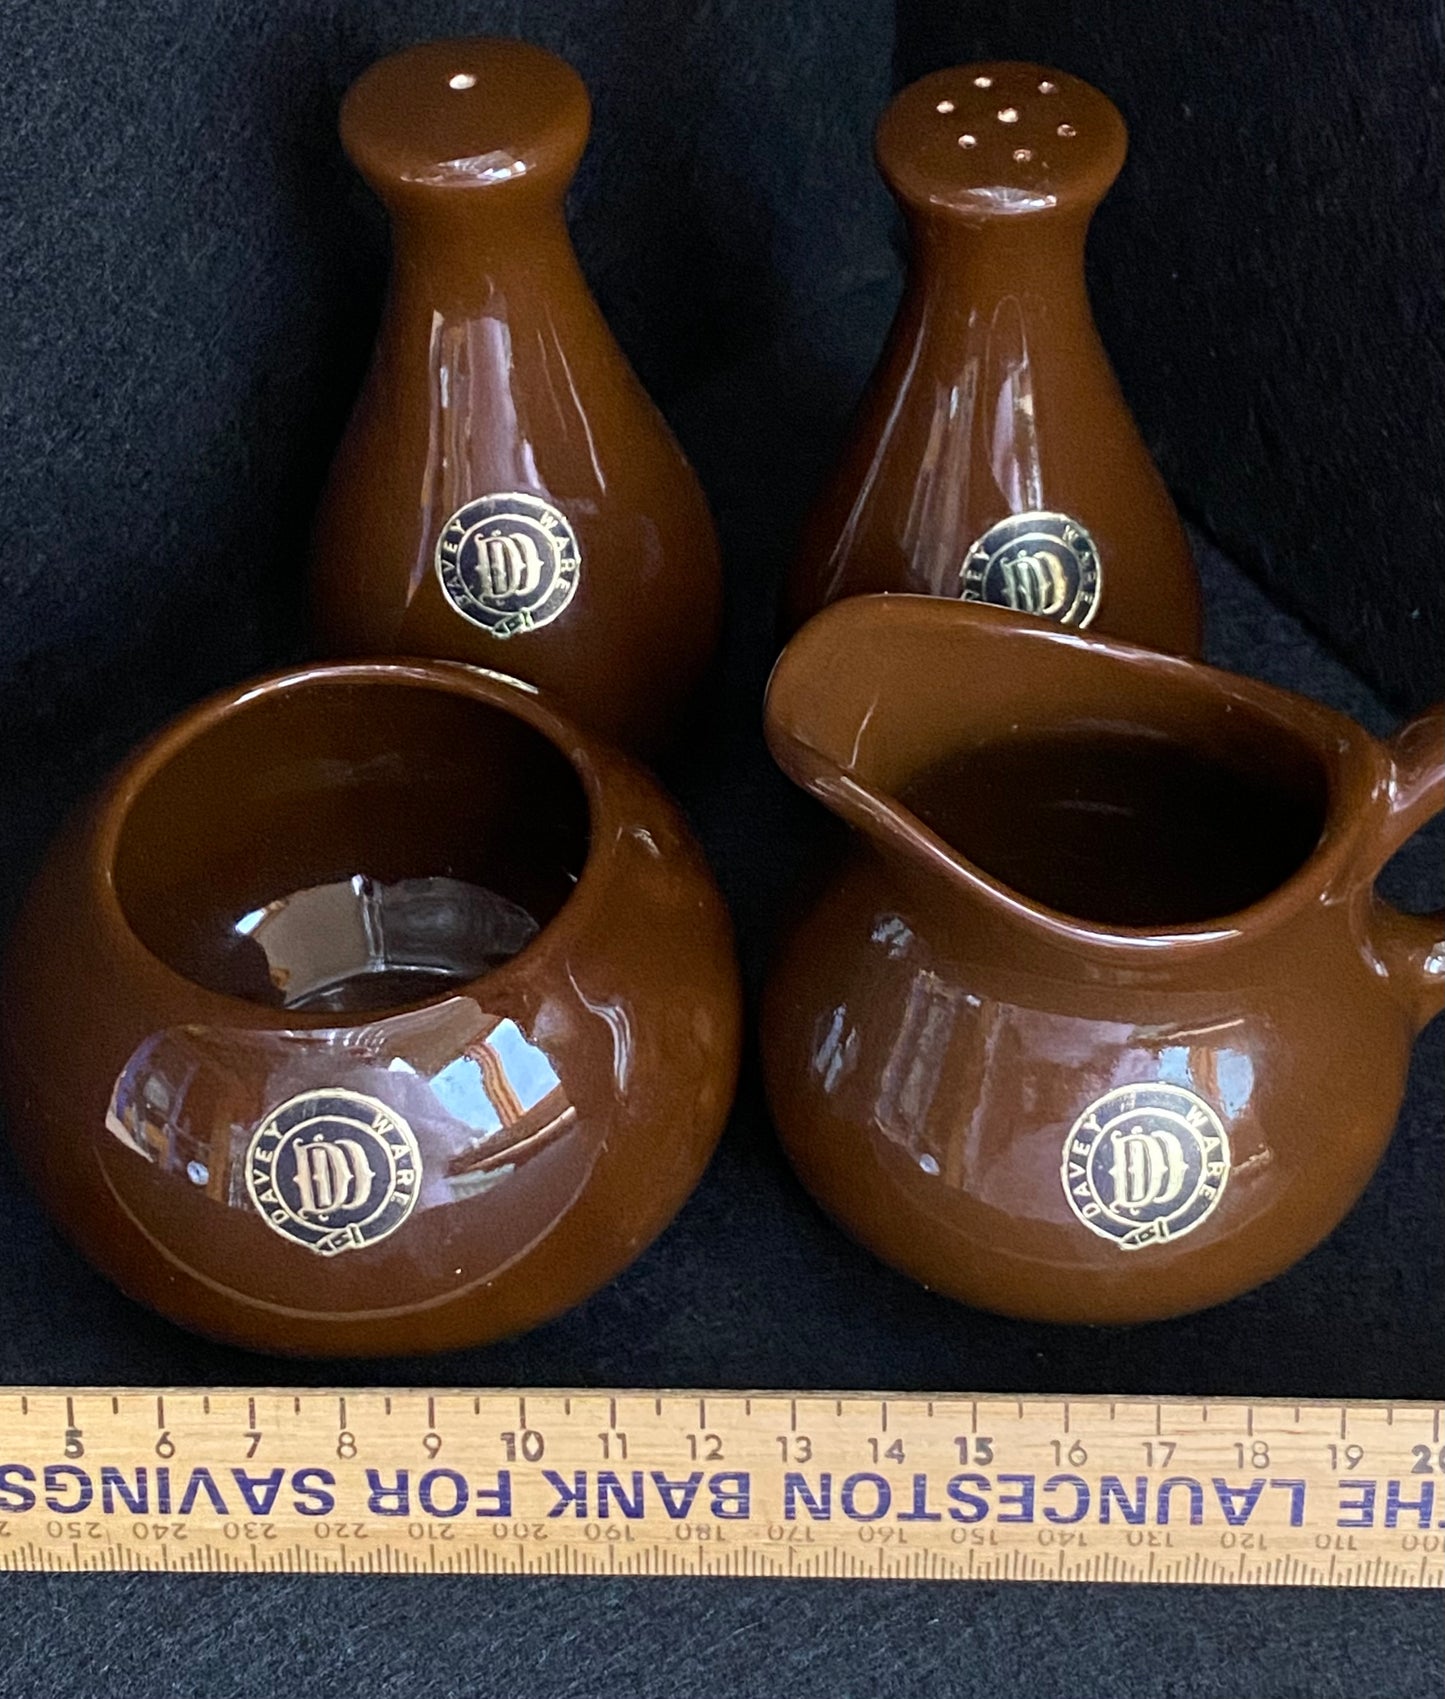 Davey Ware ‘Port Elliot’ Australia Pottery (Salt & Pepper shakers, Cream Jug and Bowl)